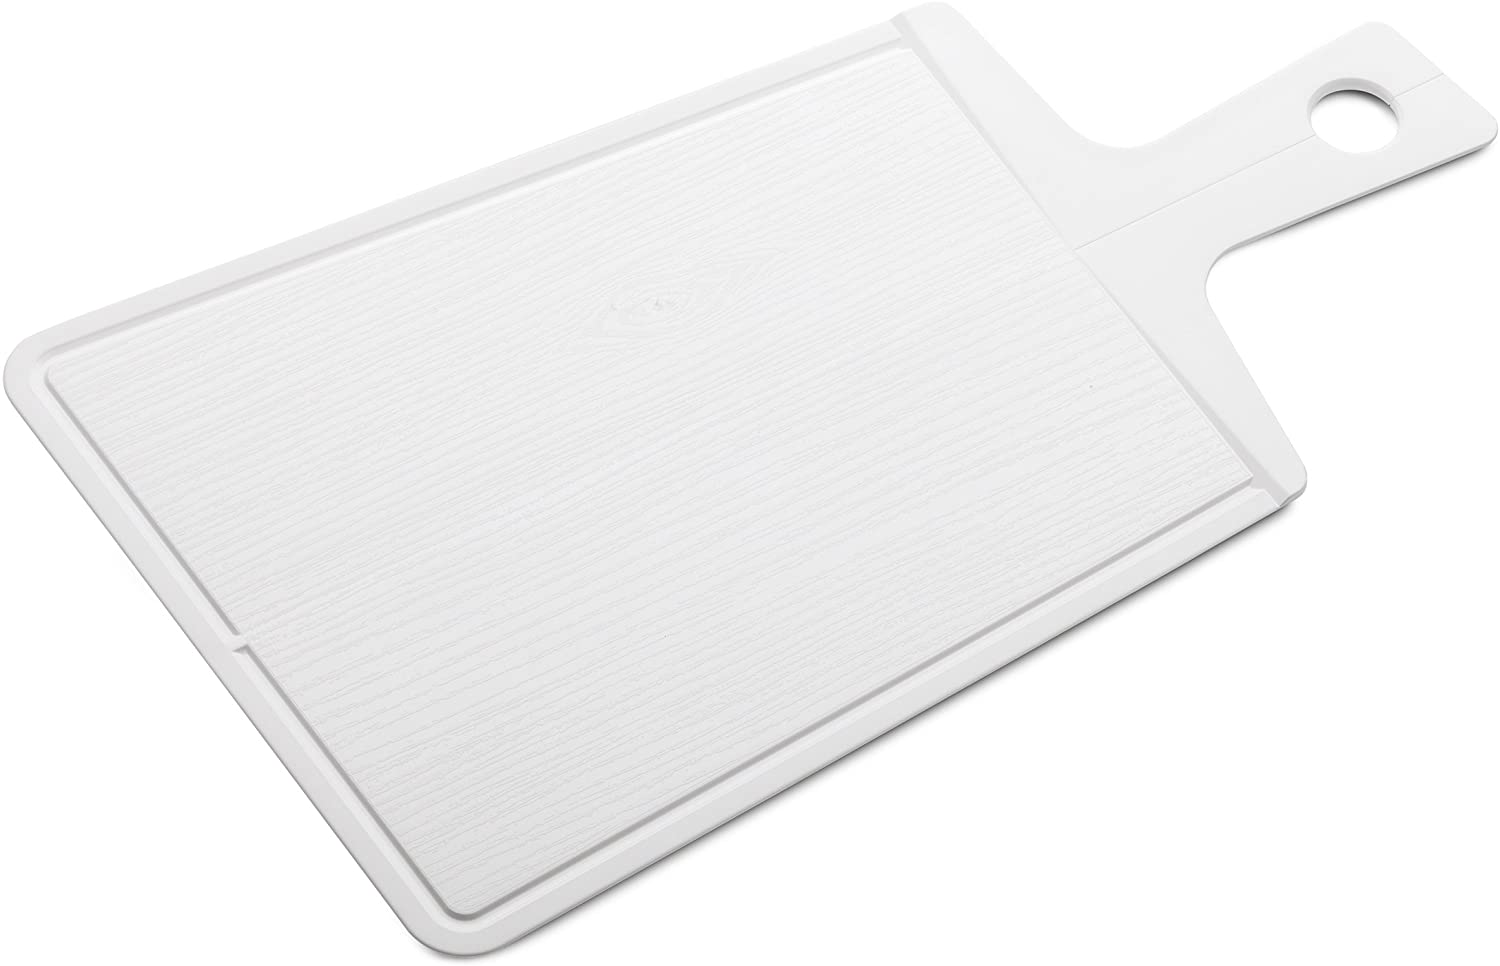 Koziol Chopping Board Snap 2.0, Plastic, White, 49.2 X 27.8 X 0.8 Cm